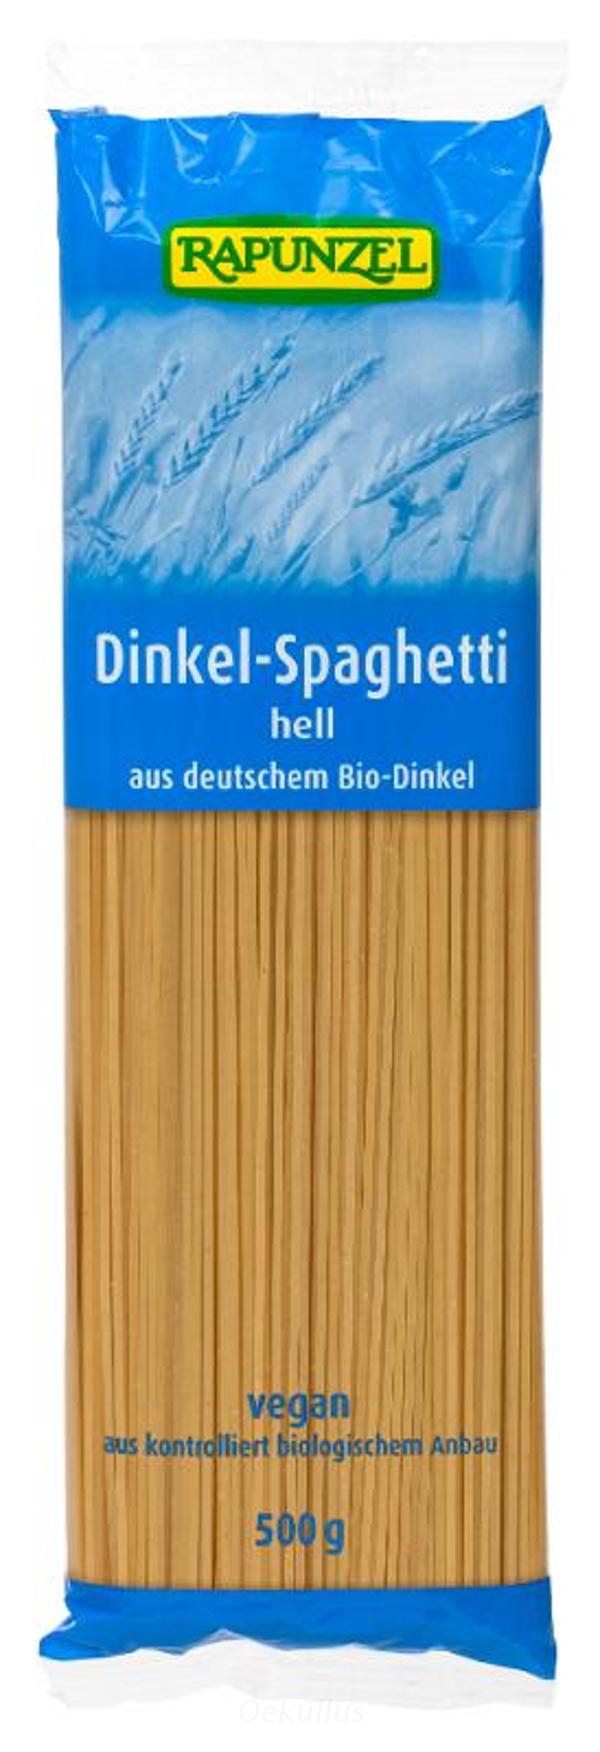 Produktfoto zu Dinkel-Spaghetti hell